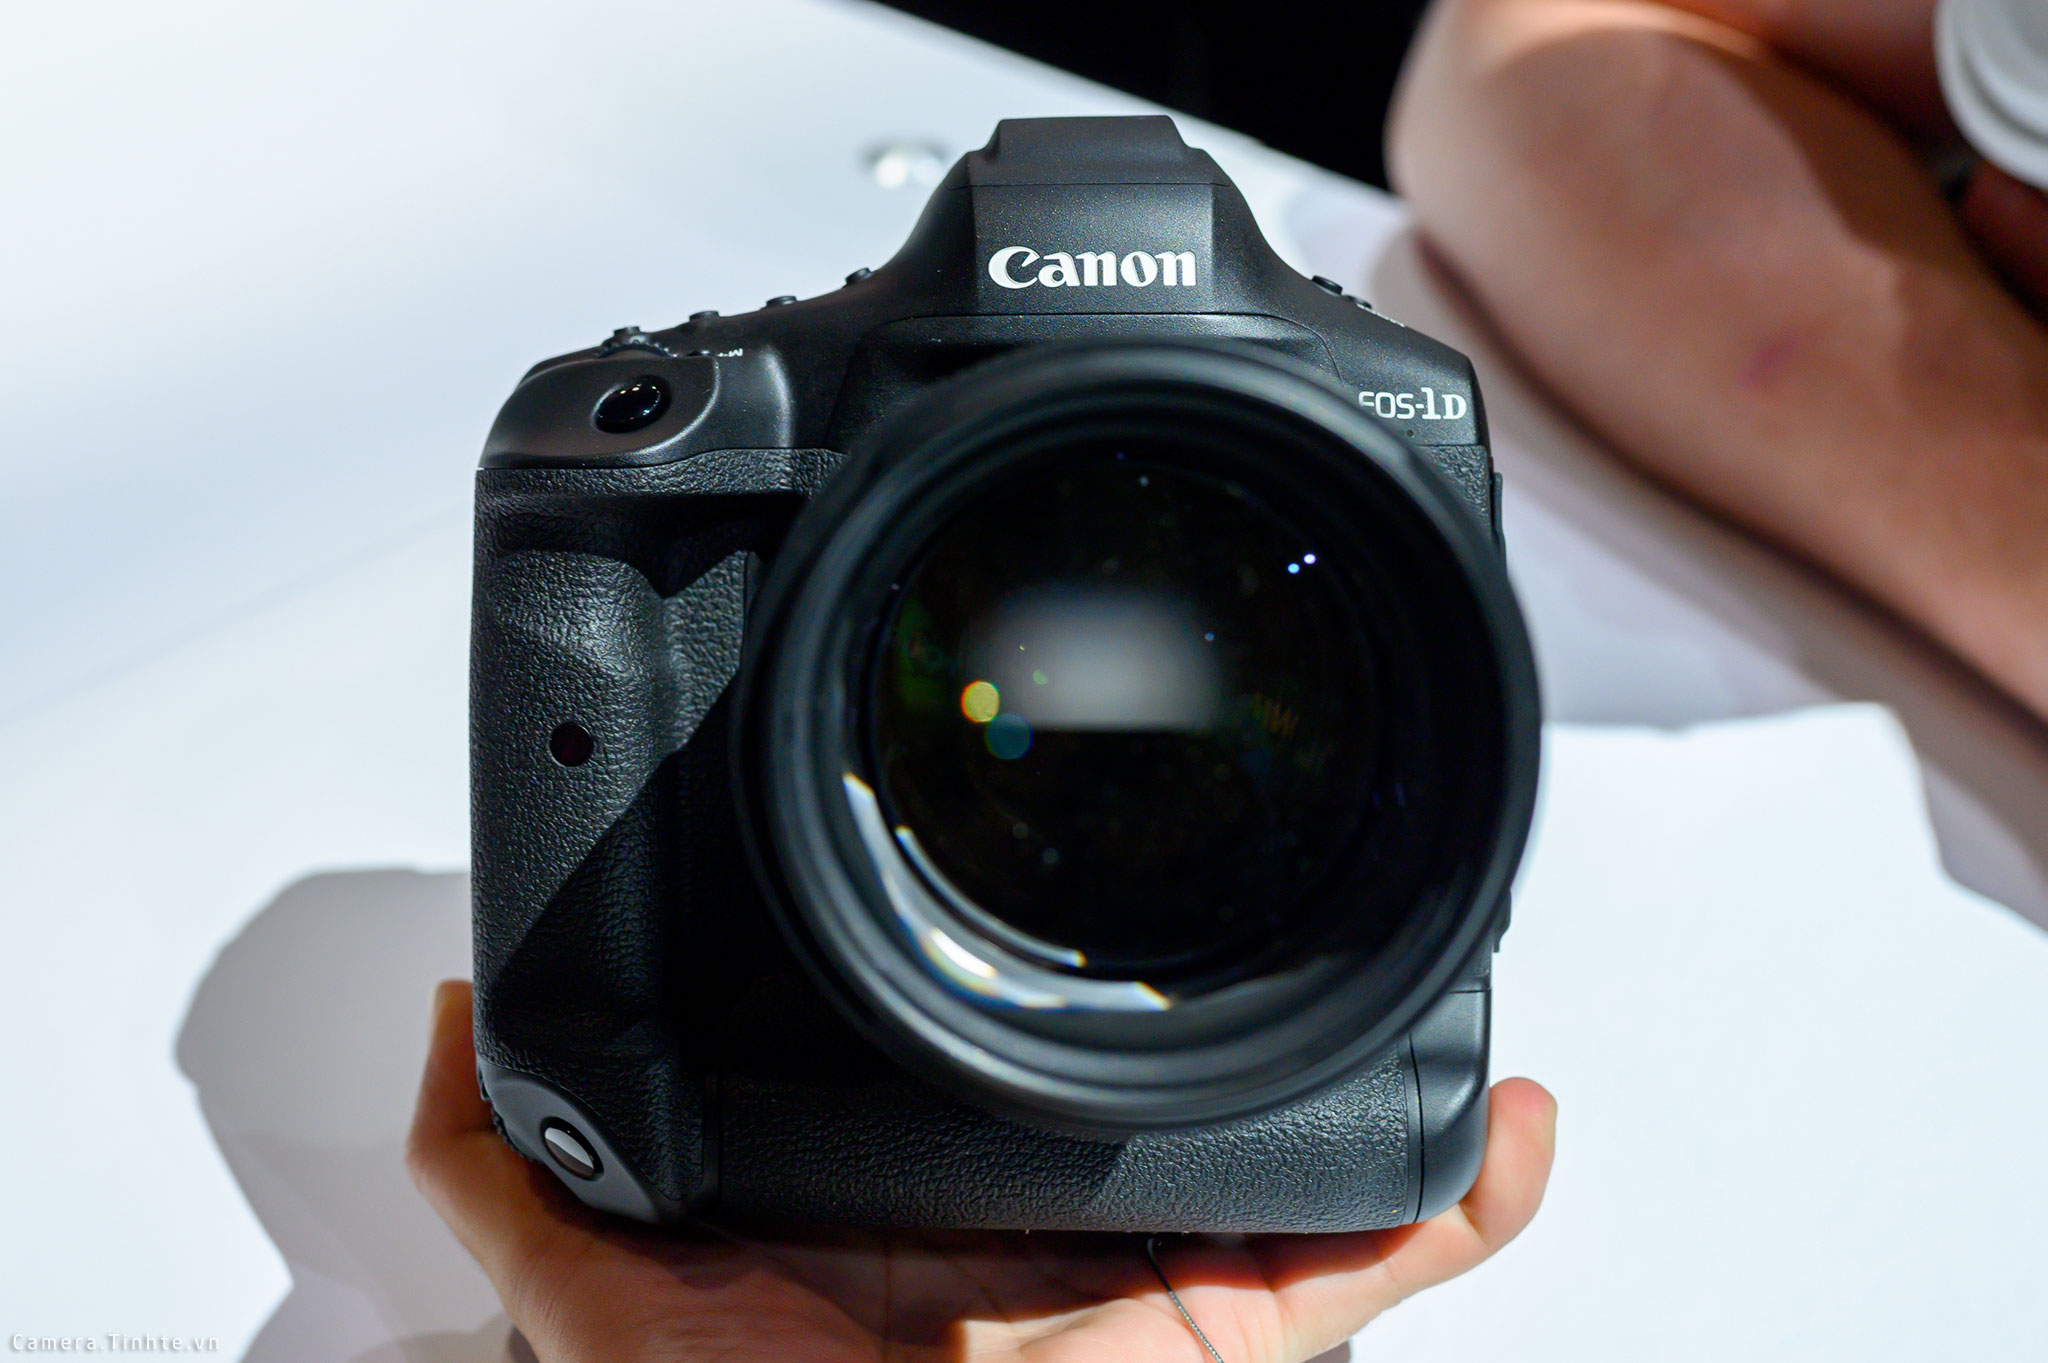 CameraTinhte_tren-tay_Ces20_Canon-EOS-1D-X-Mark-III_00021.jpg